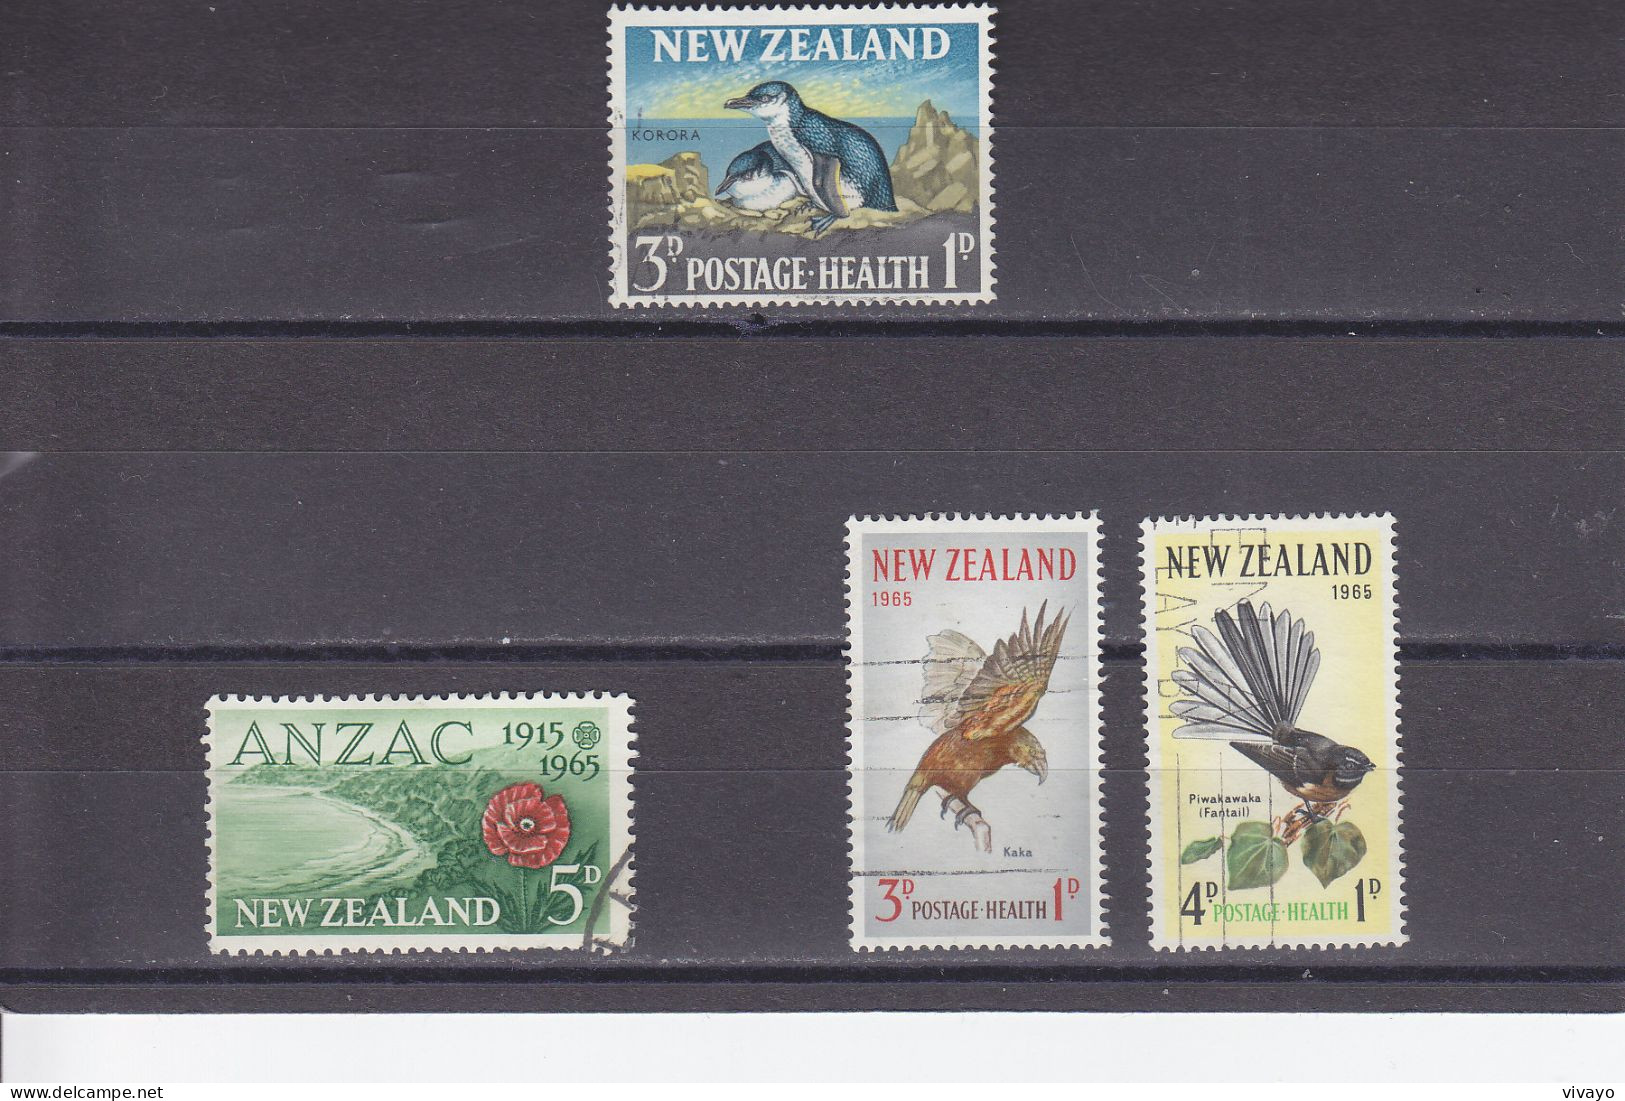 NEW ZEALAND - O / FINE CANCELLED - 1964/1965 - BIRDS, HEALTH, ANZAC - Yv. 422, 426, 430/1 - Mi. 434, 438, 442/3 - Used Stamps